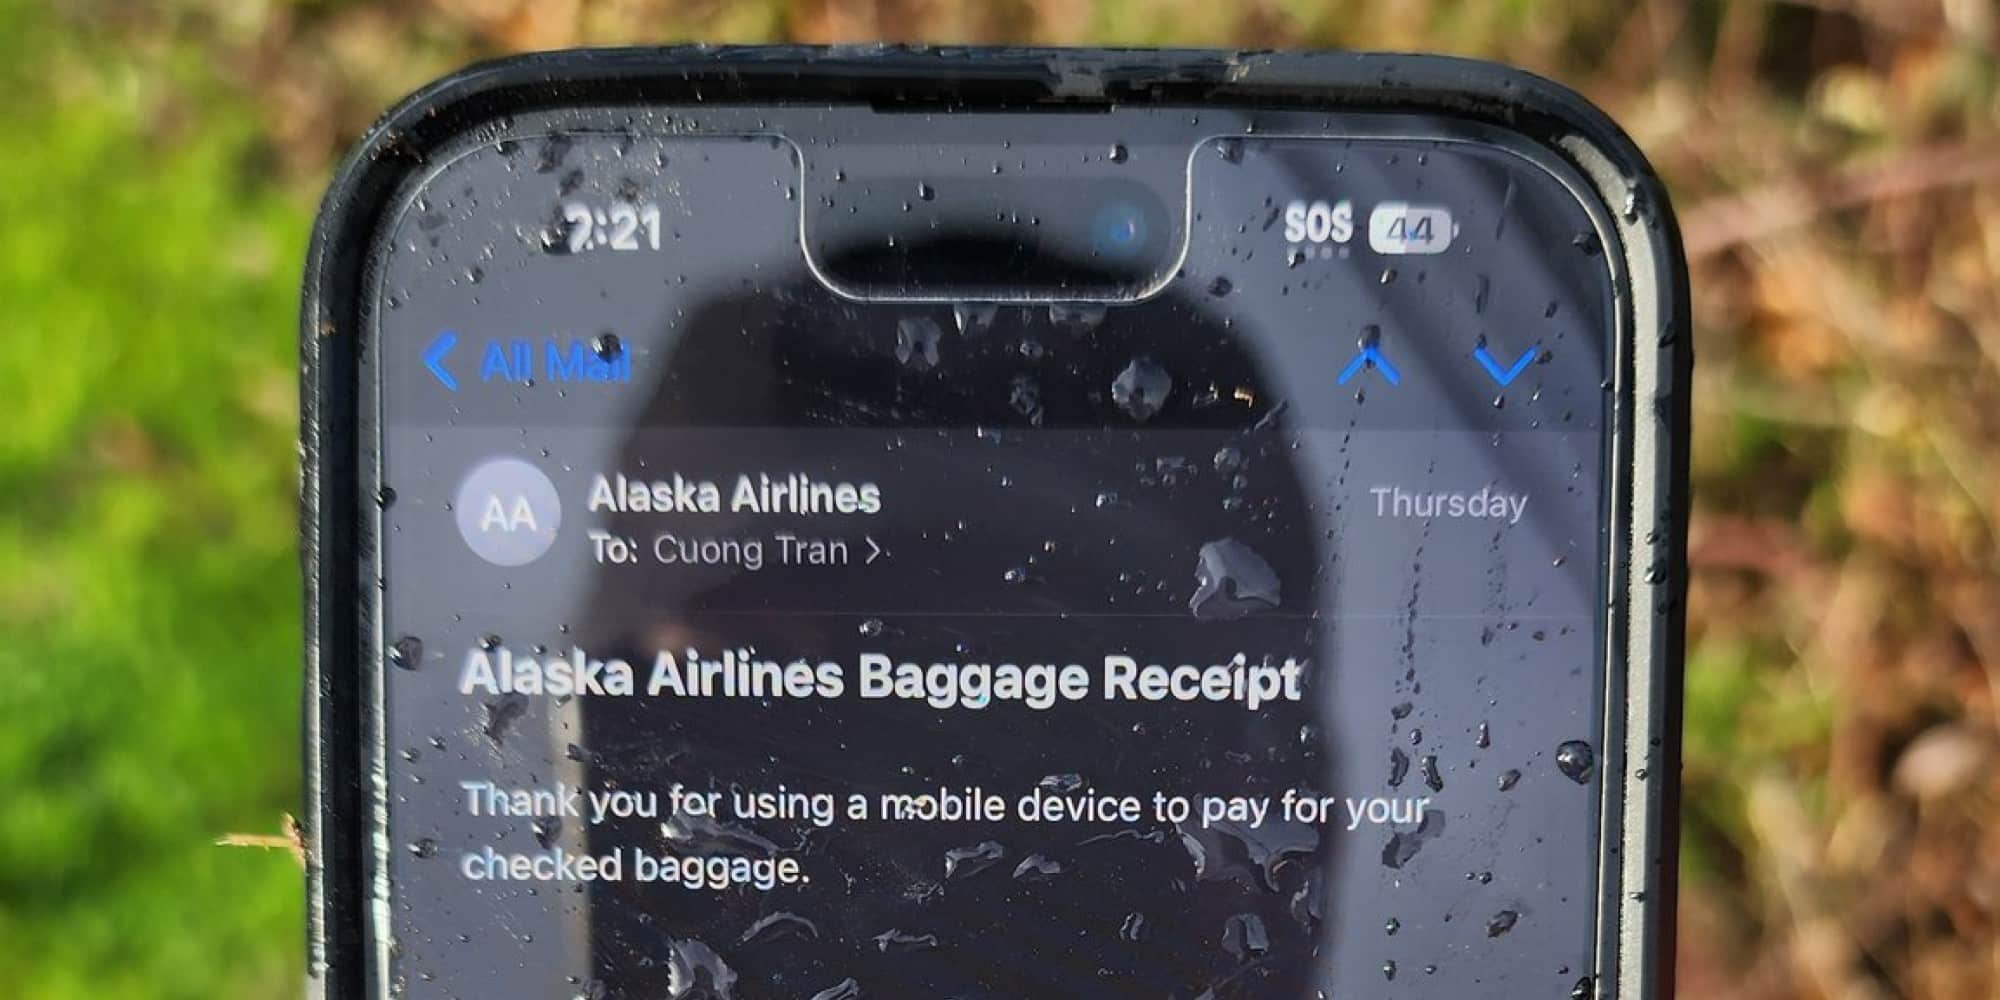 iPhone που έπεσε από το Boeing της Alaska Airlines βρέθηκε άθικτο στο έδαφος